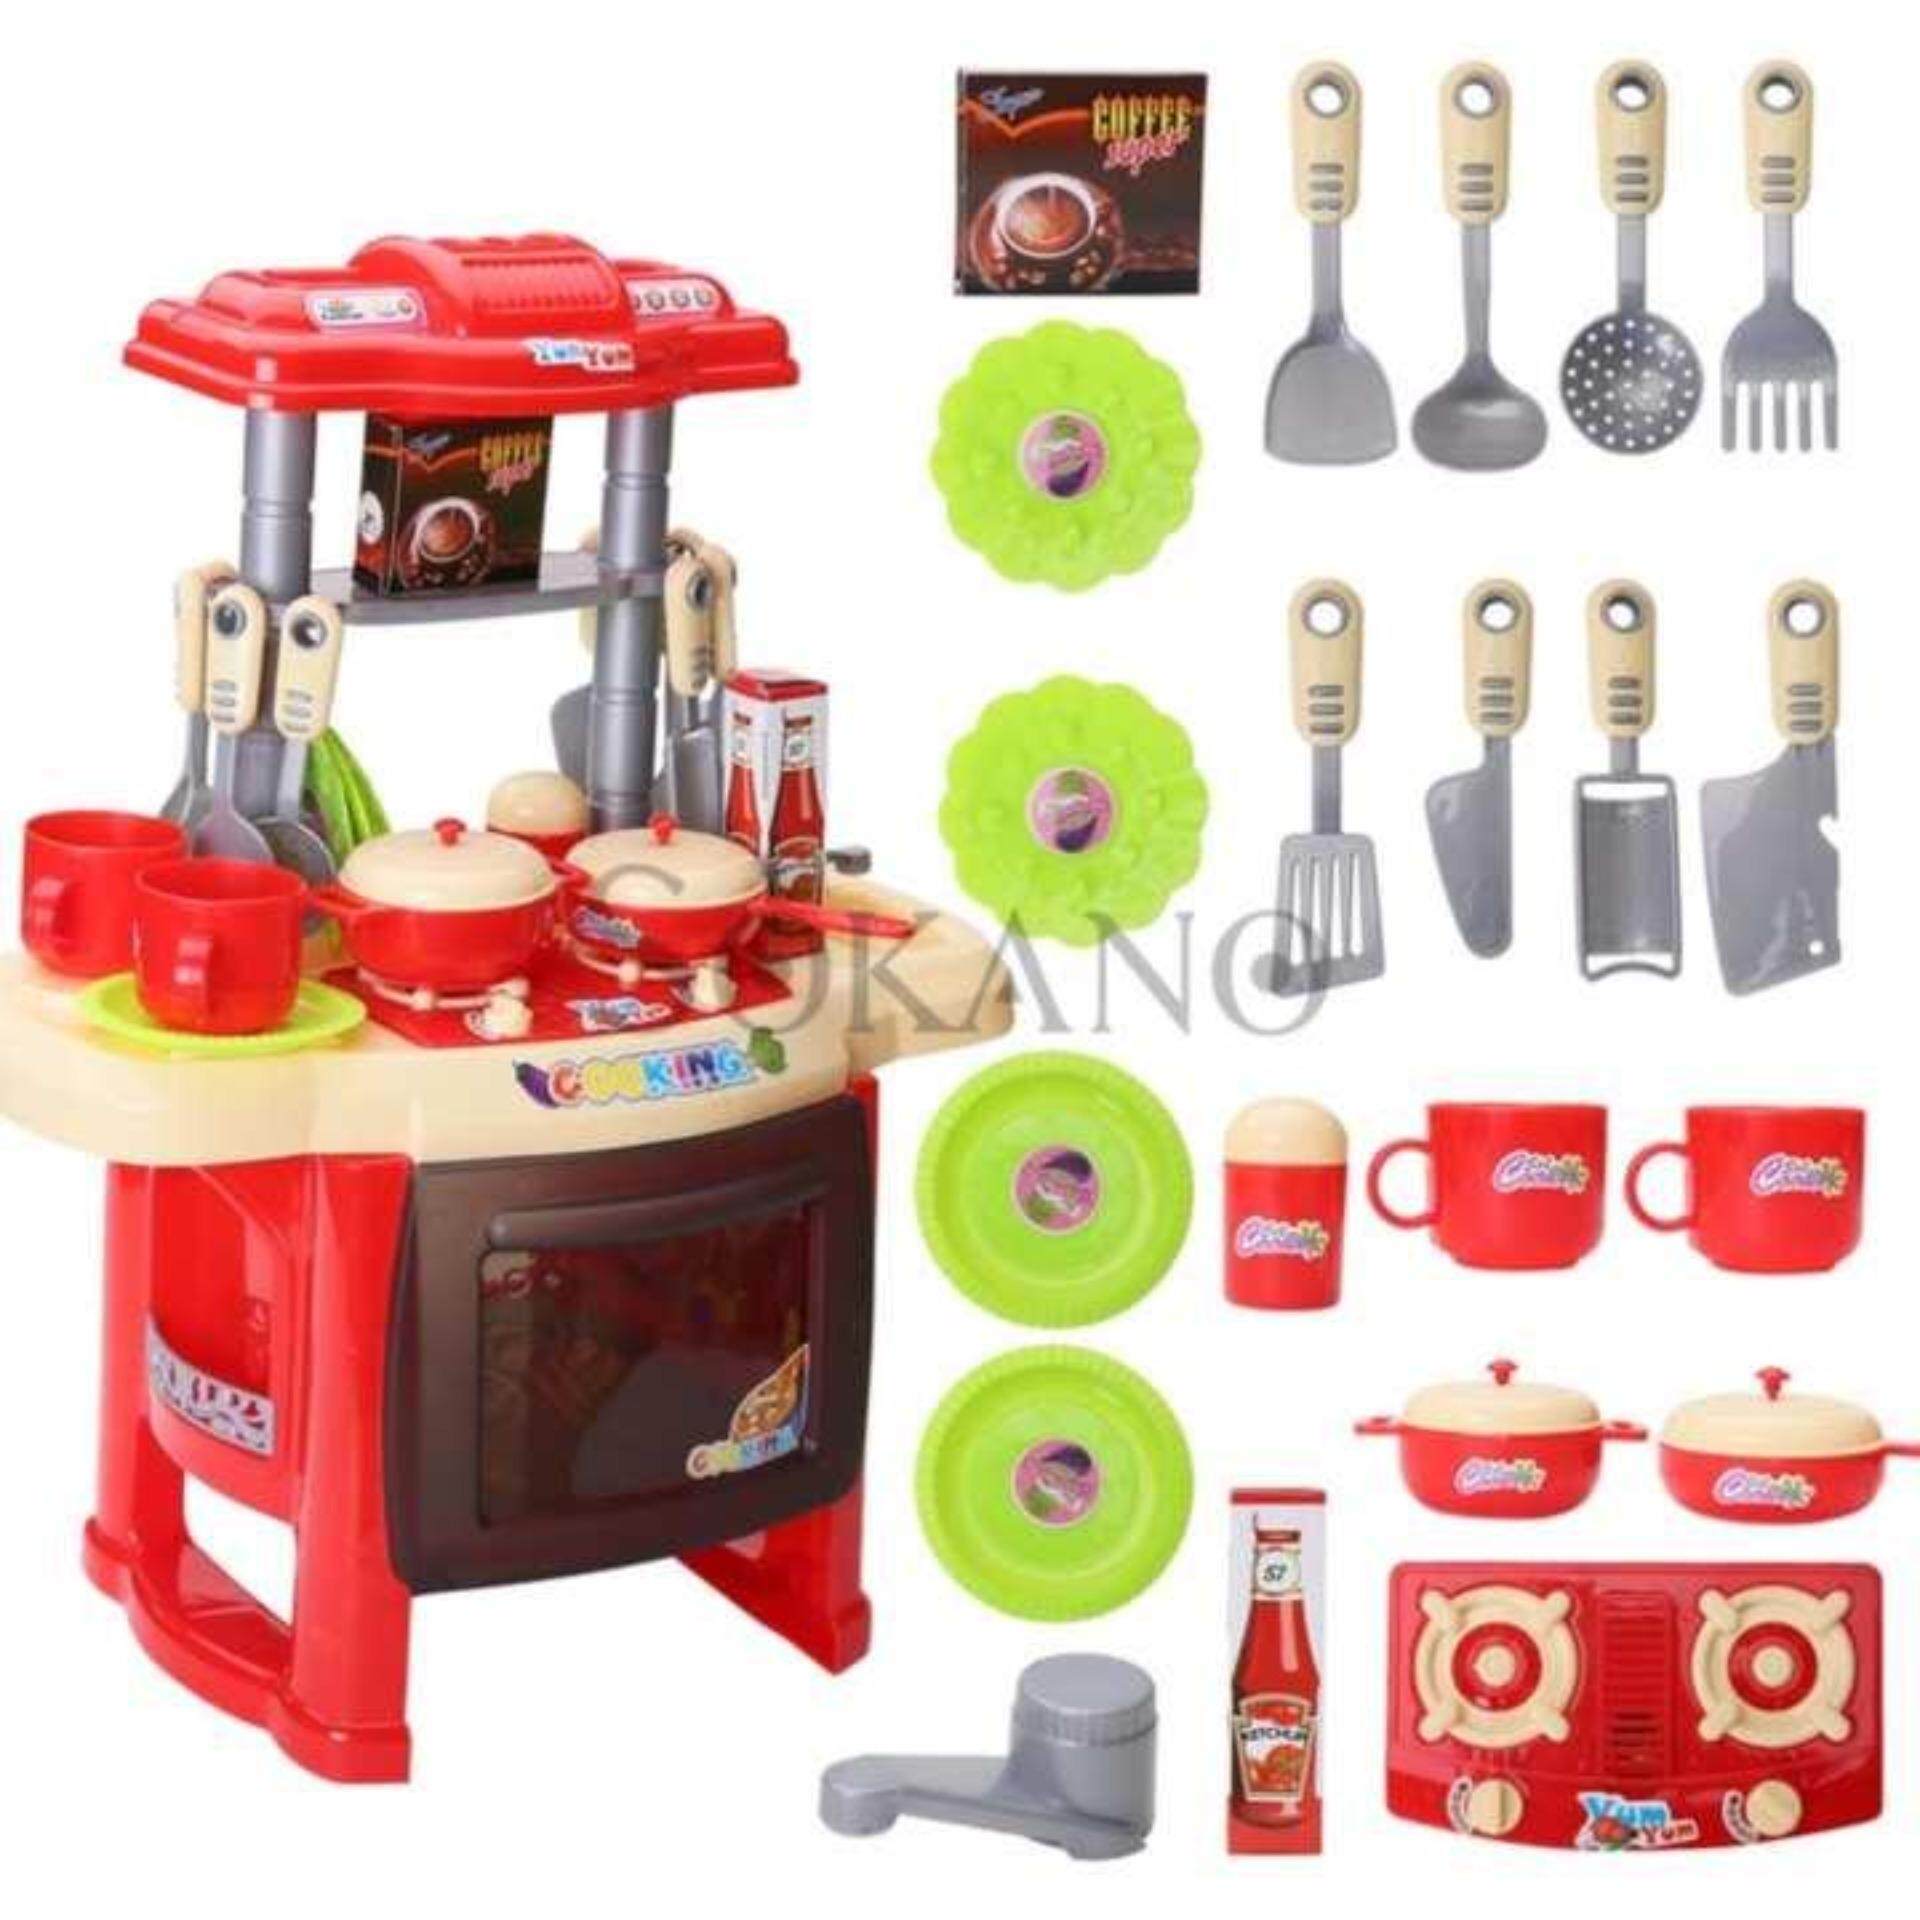 SOKANO Mini Kitchen Fun Playset With Full Utensils Set- Red toys for girls